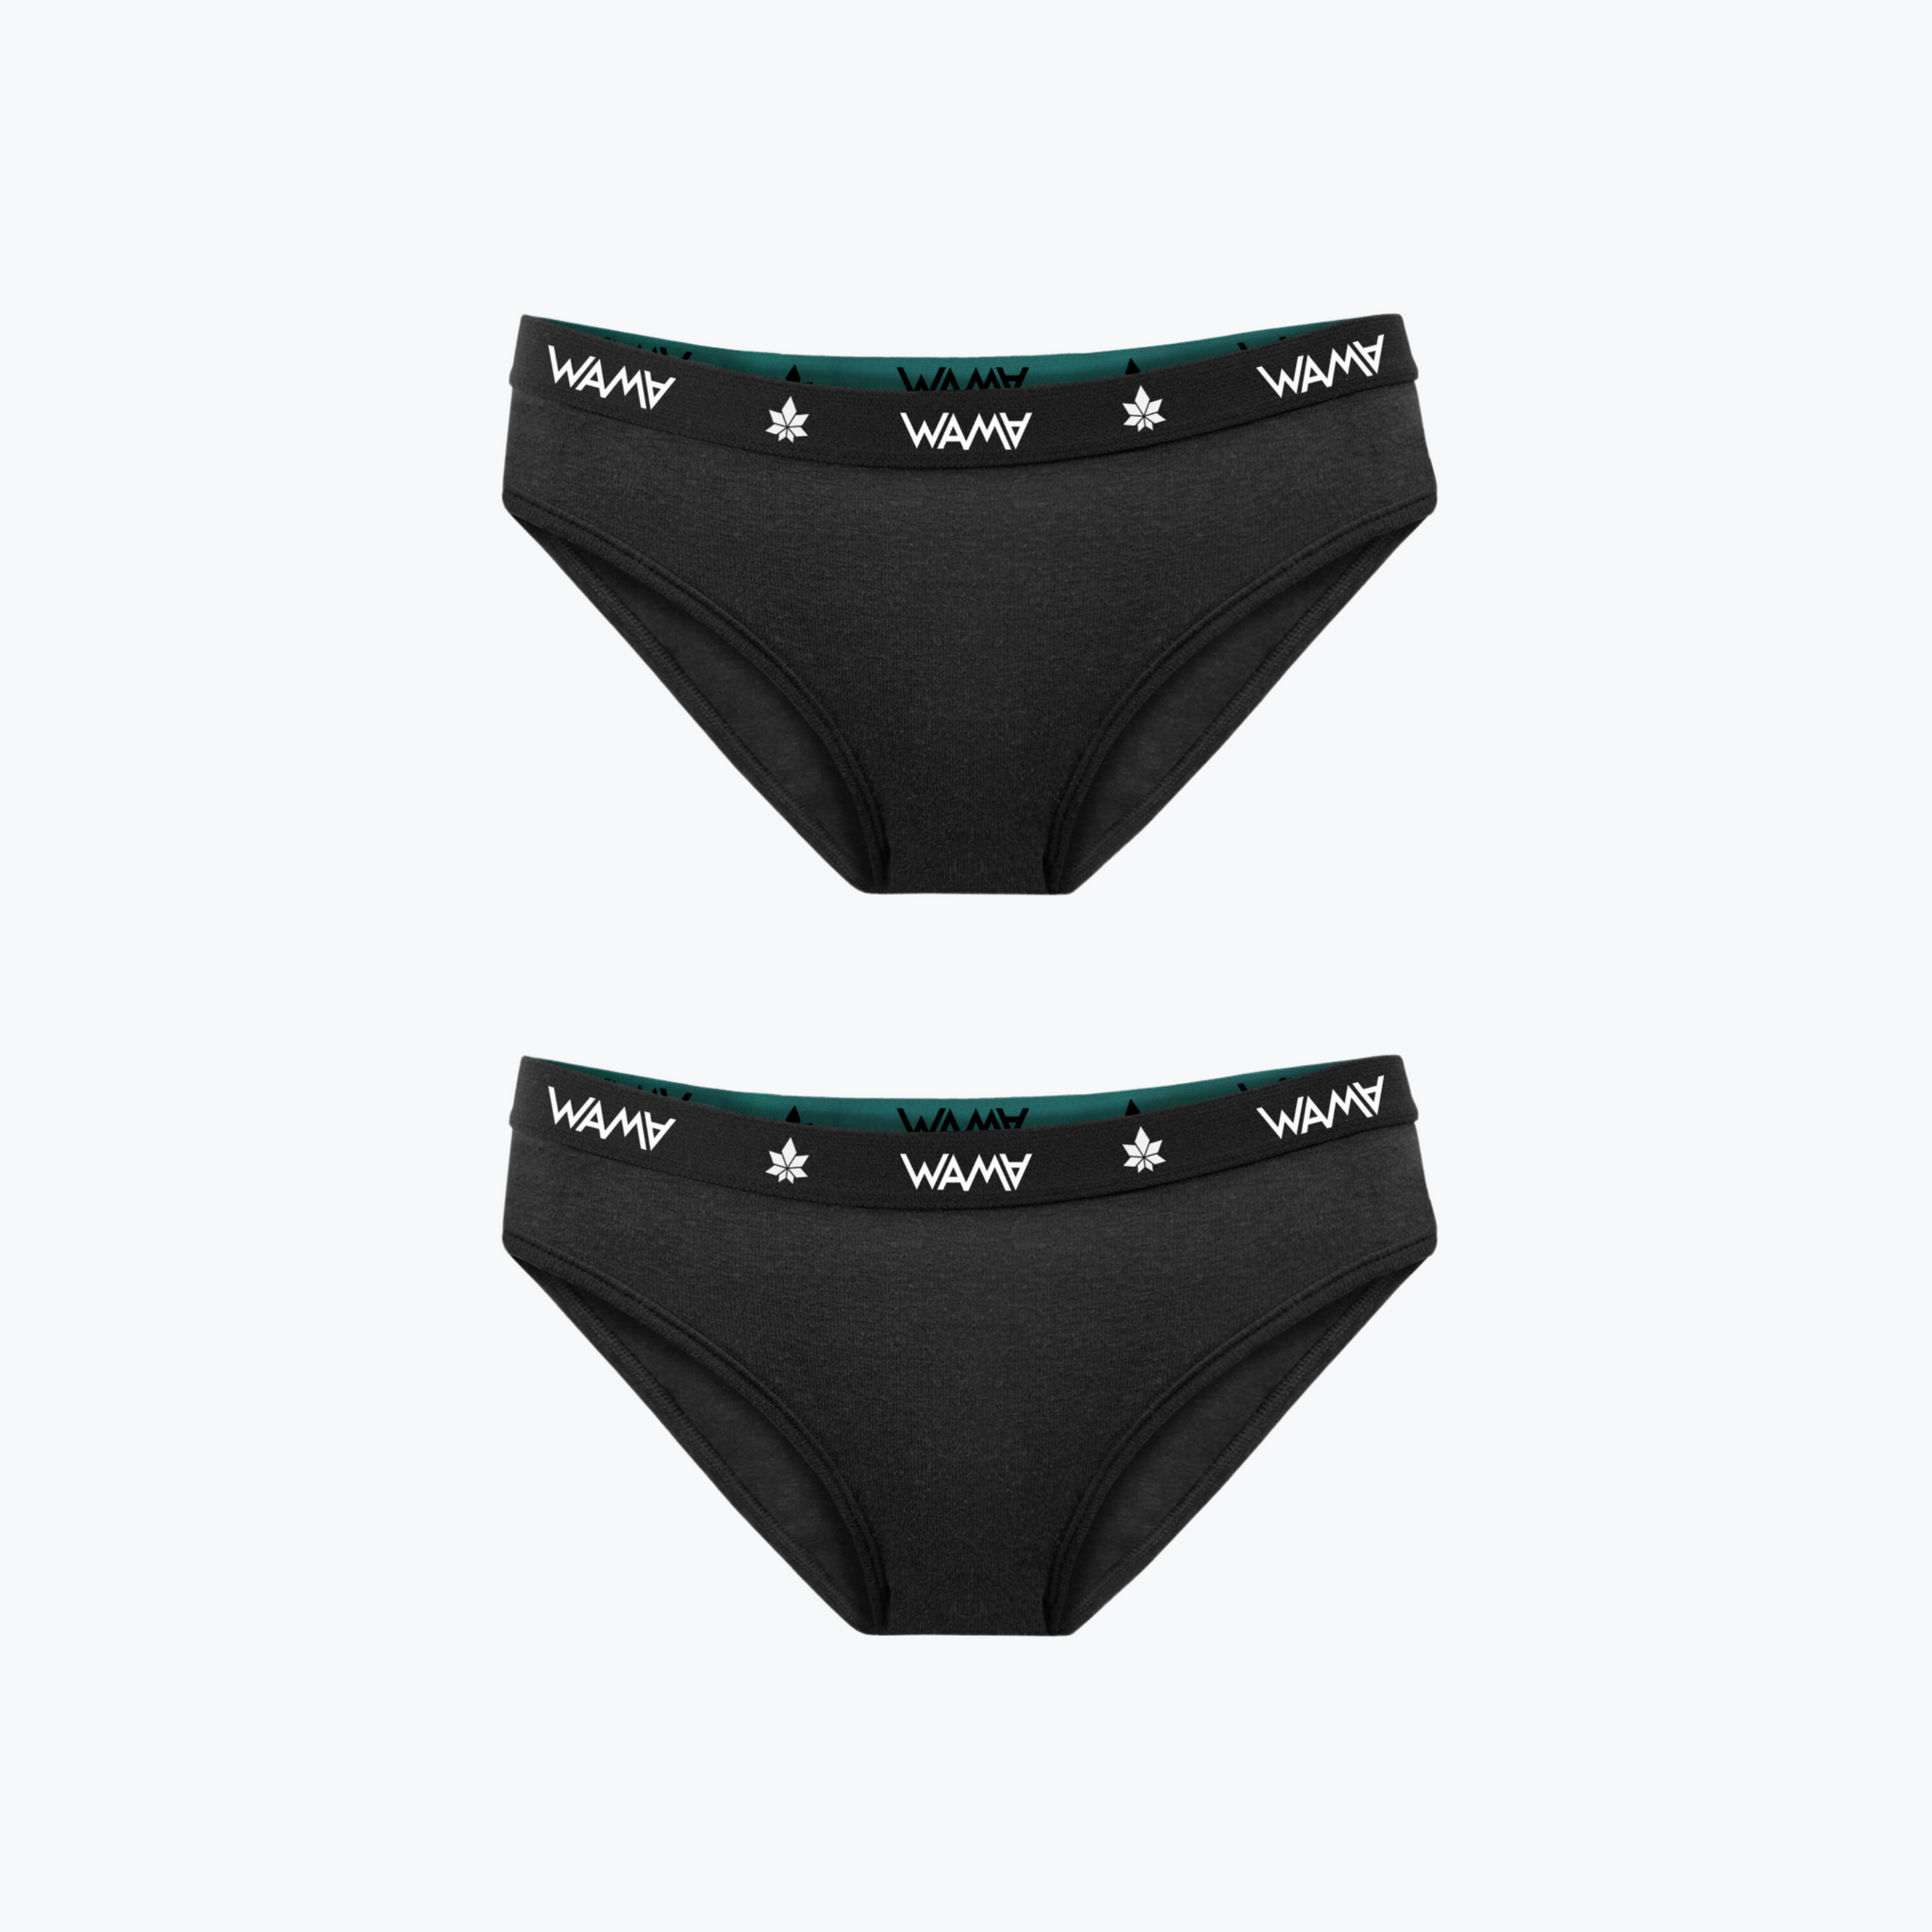 5 Types Of Panties For All Women – WAMA Underwear